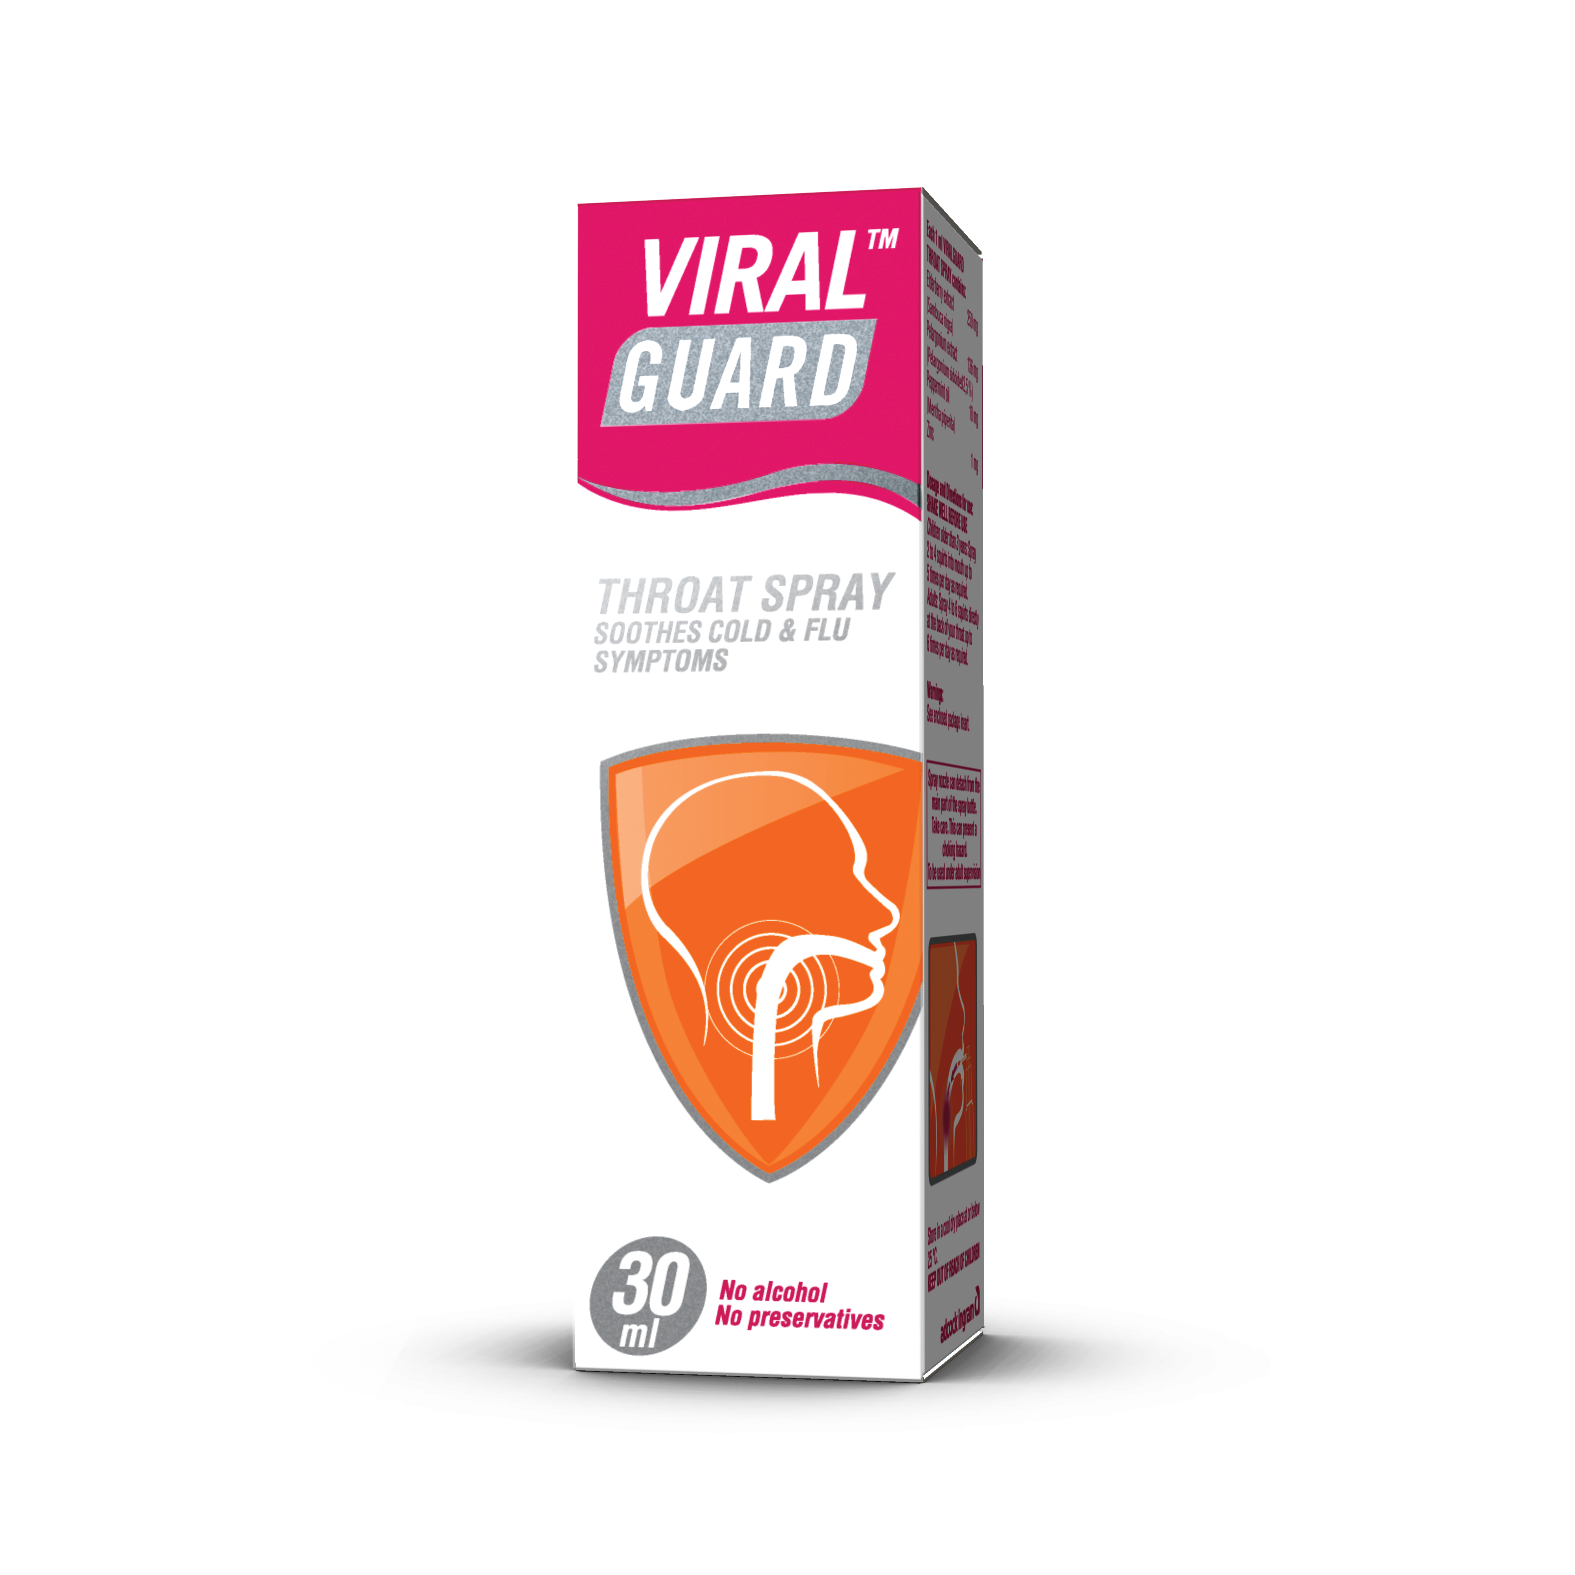 Viral Guard Throat Spray, 30ml